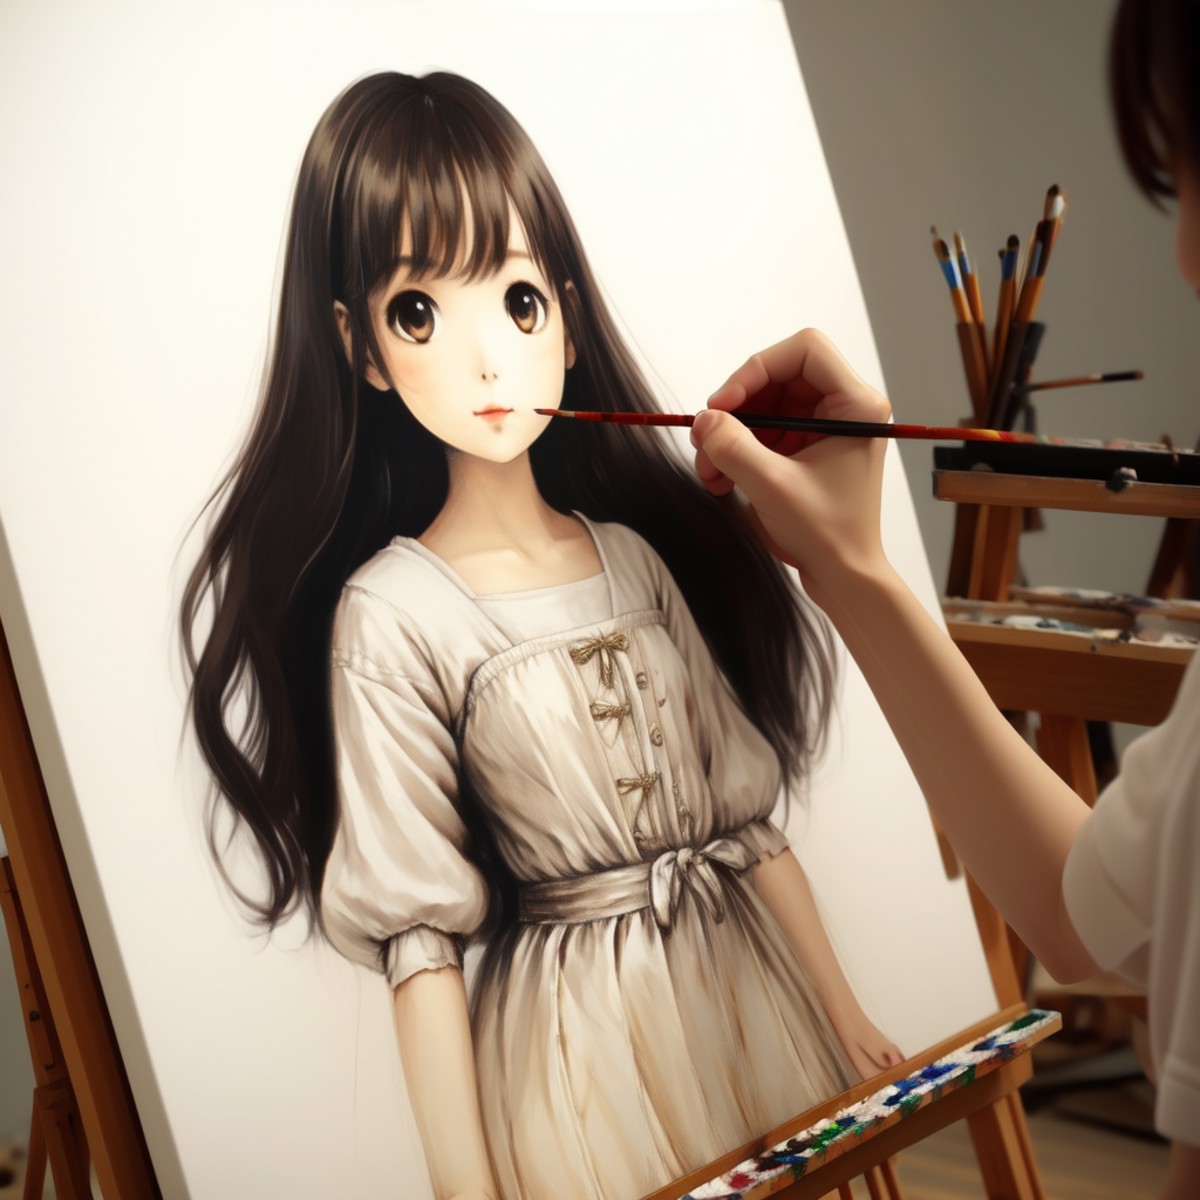 <lora:artist_hands_v2:0.7>, detailed girl shaped, on_back, holding paintbrush, painting (action), palette (object), art br...